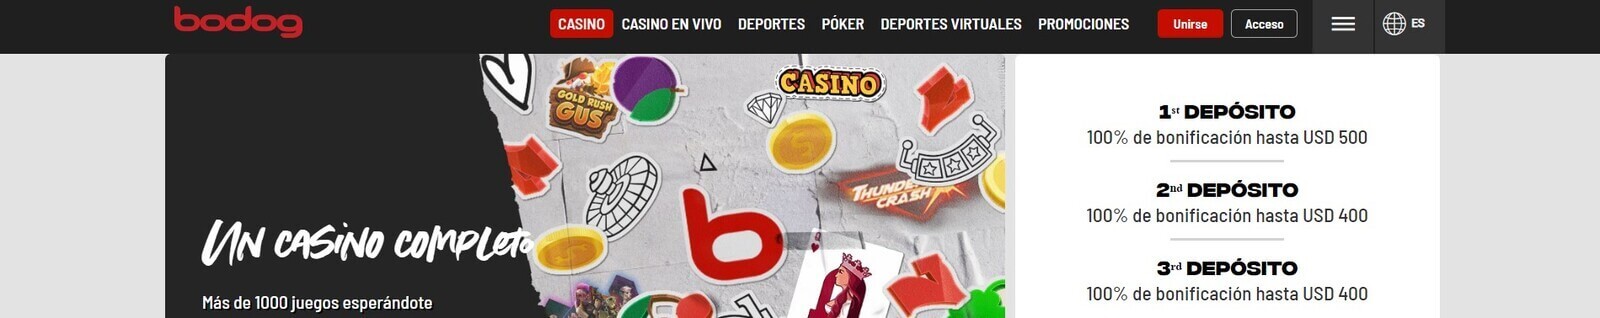 Página web de Bodog Casino